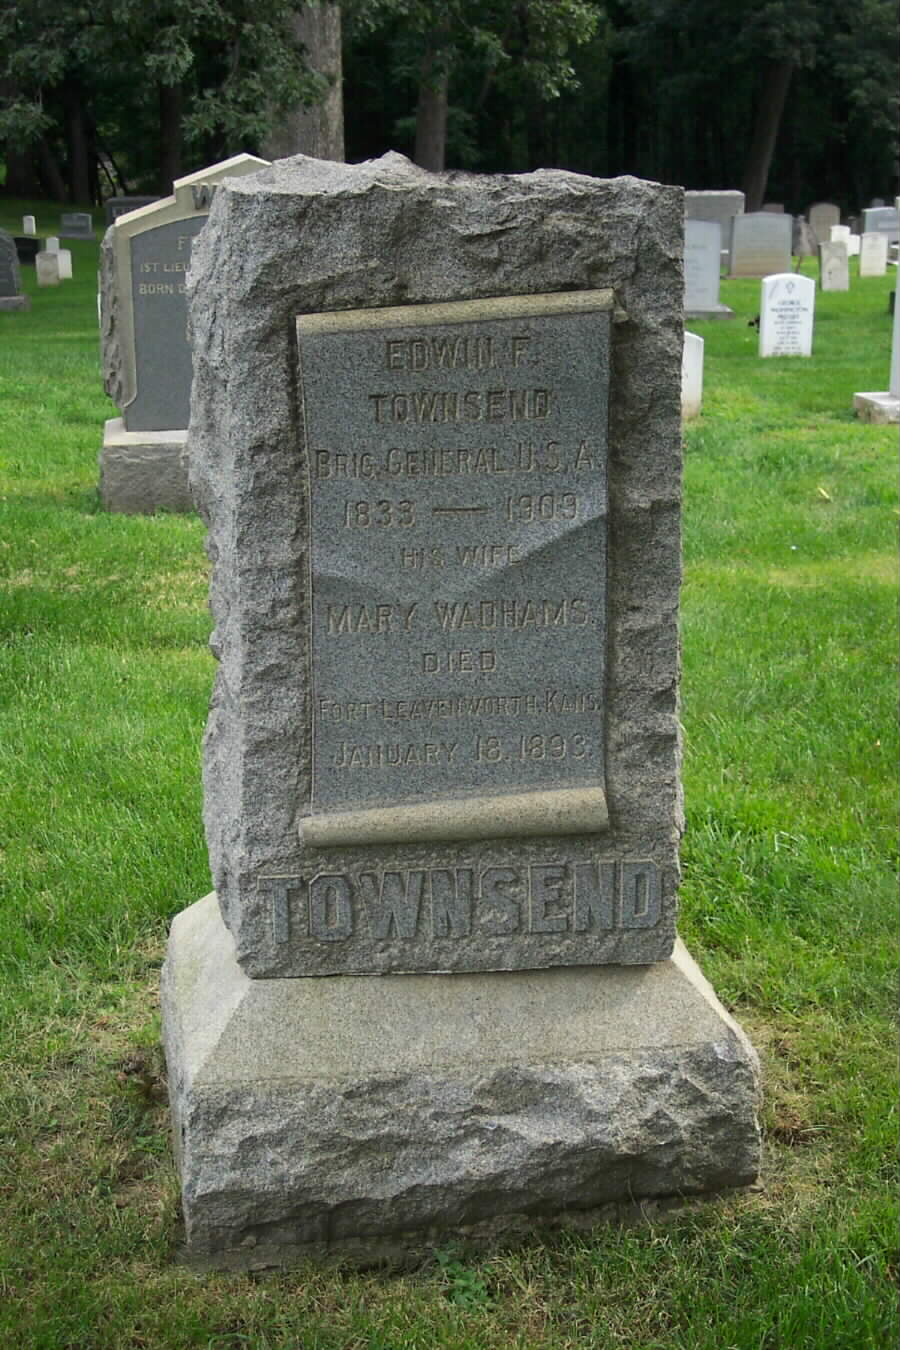 eftownsend-gravesite-section1-062803